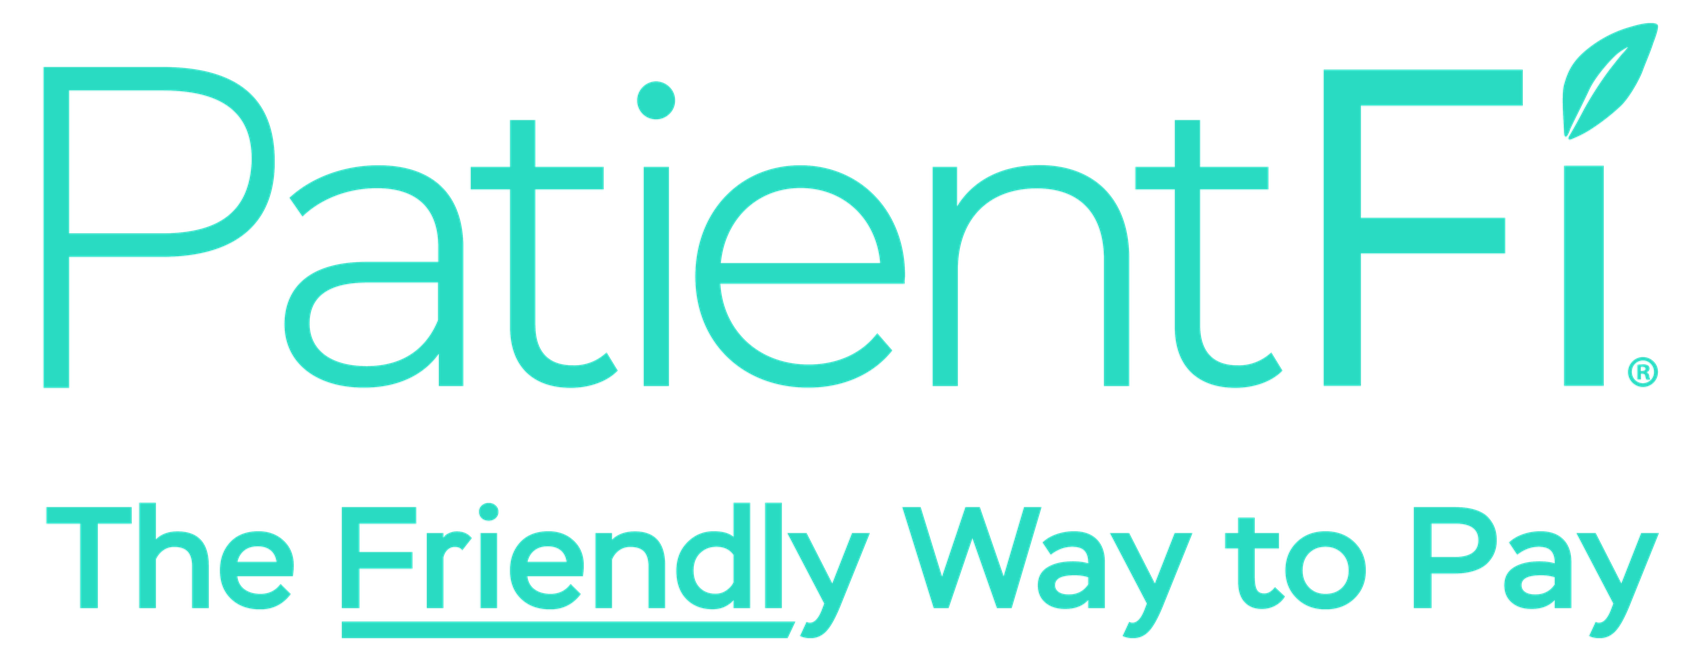 patientfi logo